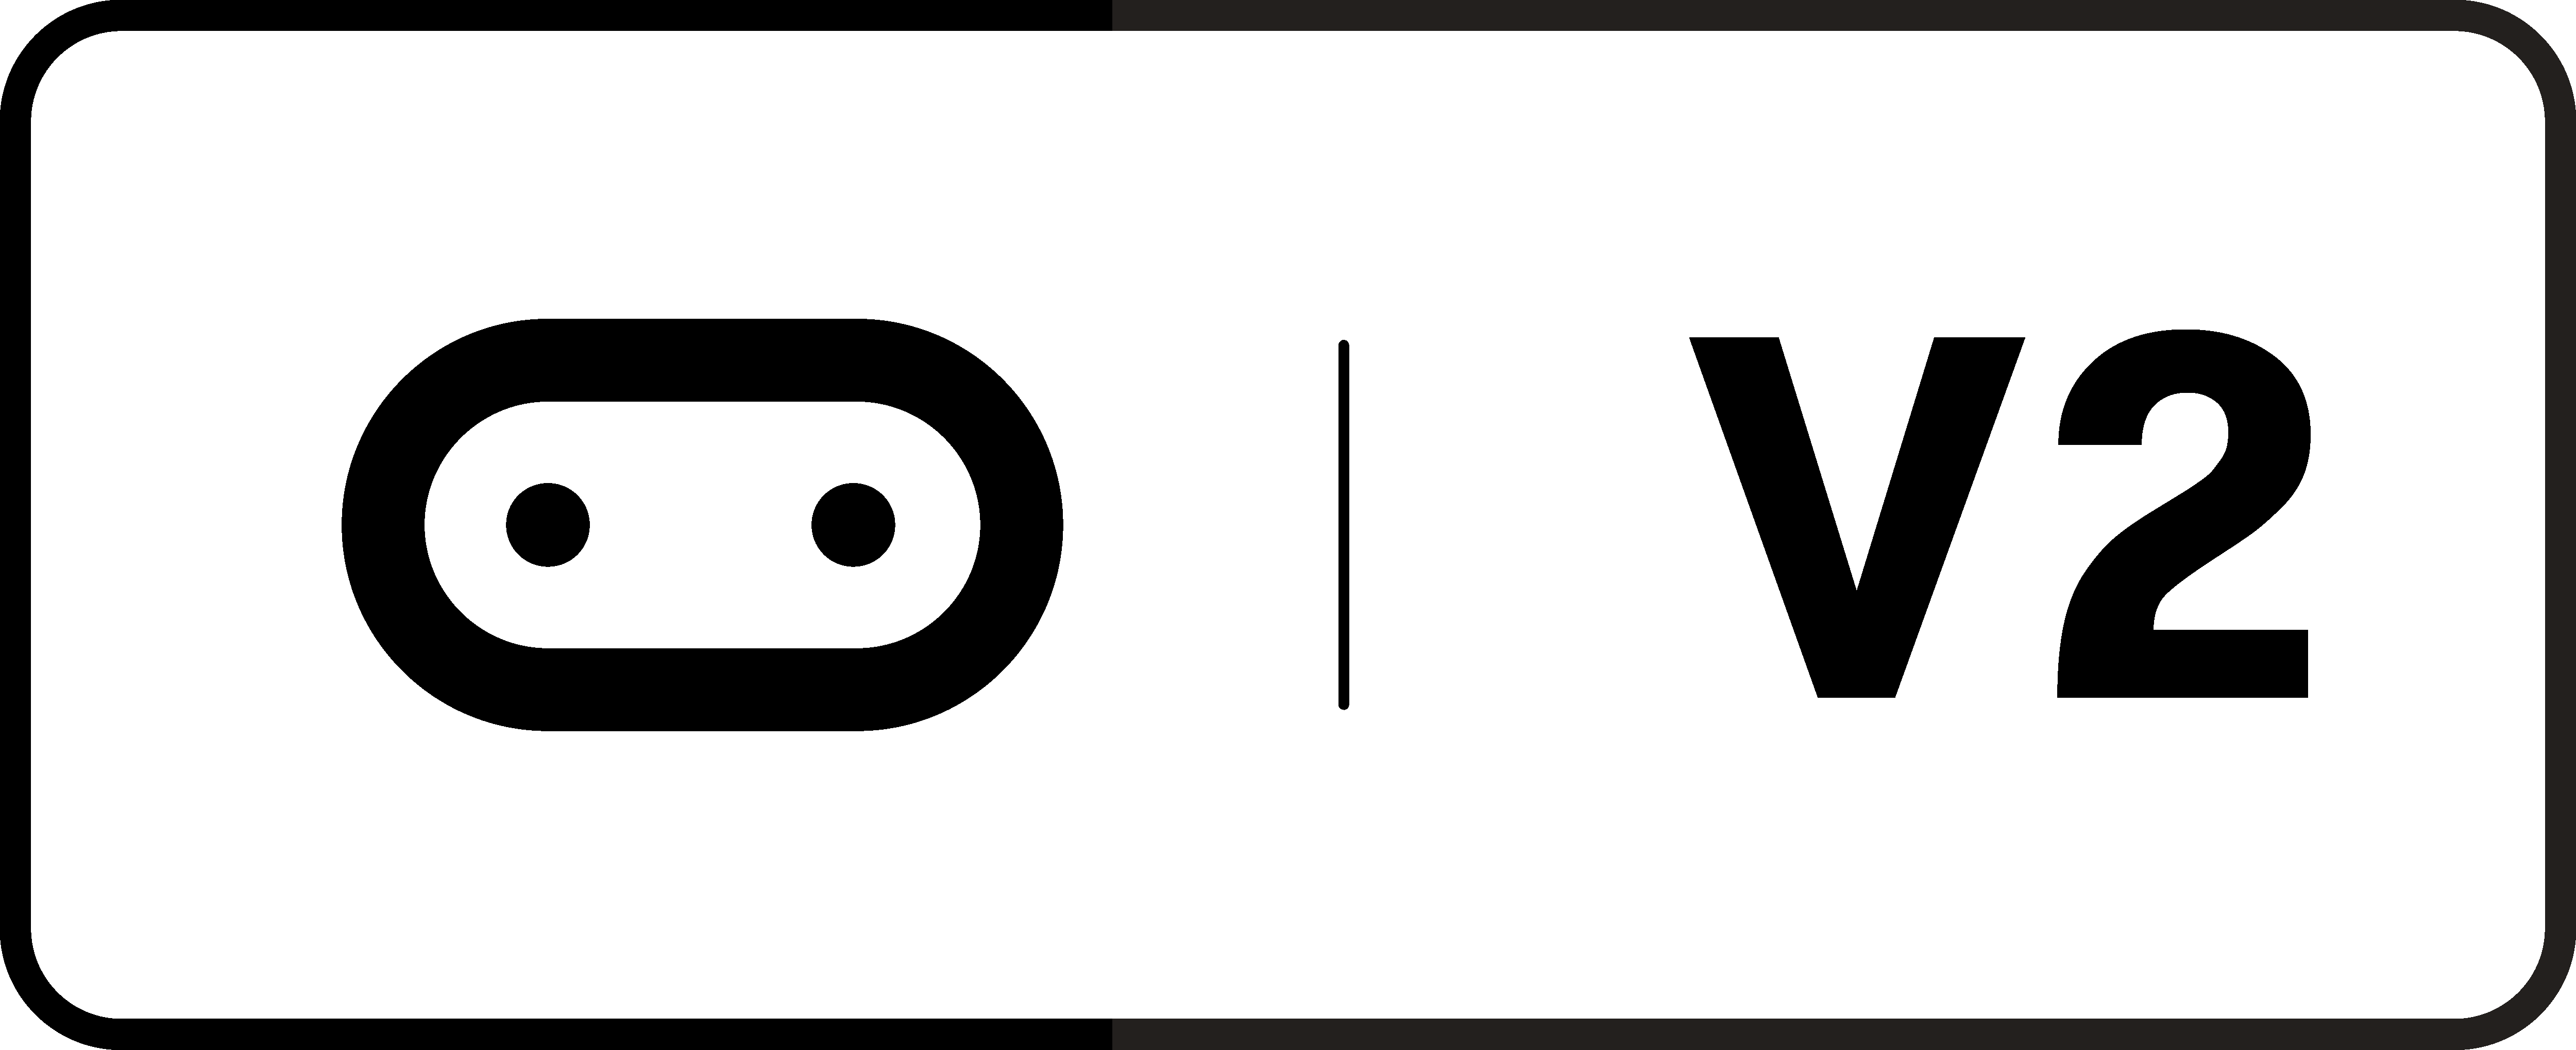 Bit Logo PNG Transparent & SVG Vector - Freebie Supply